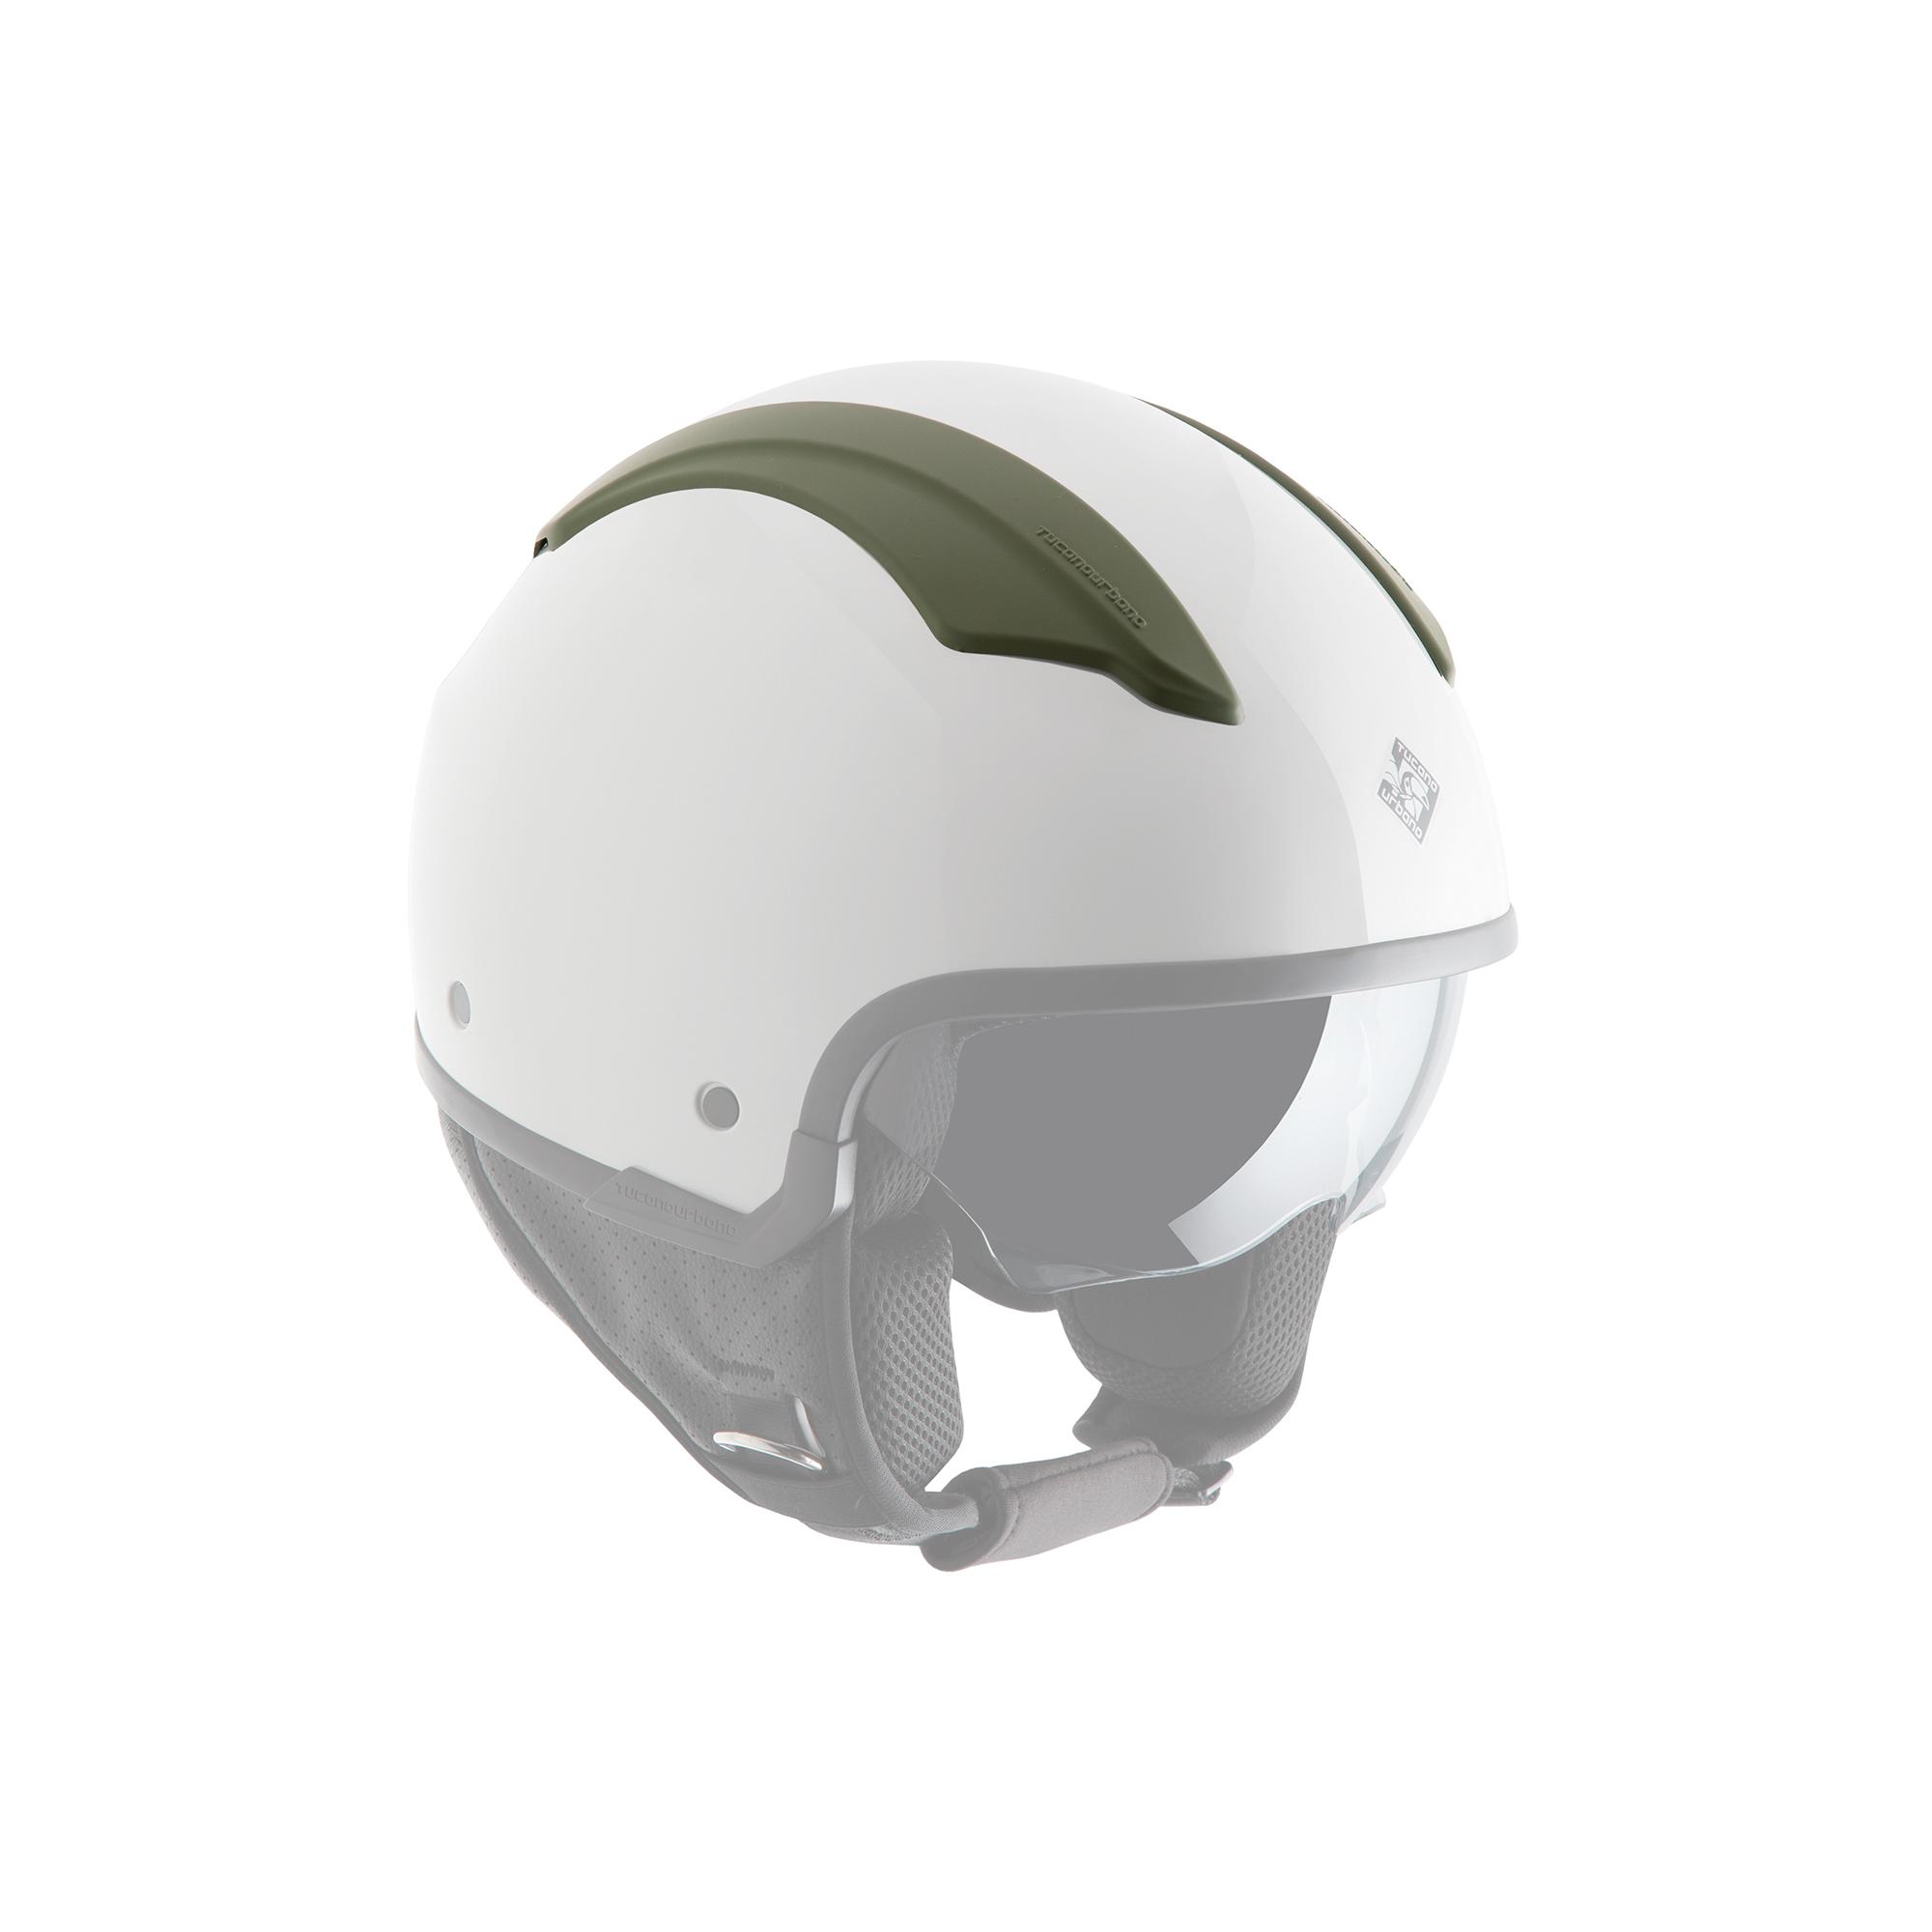 Air–ventilation Covering For El'fresh And El'top Helmet Matte Airborne Green Tucano Urbano